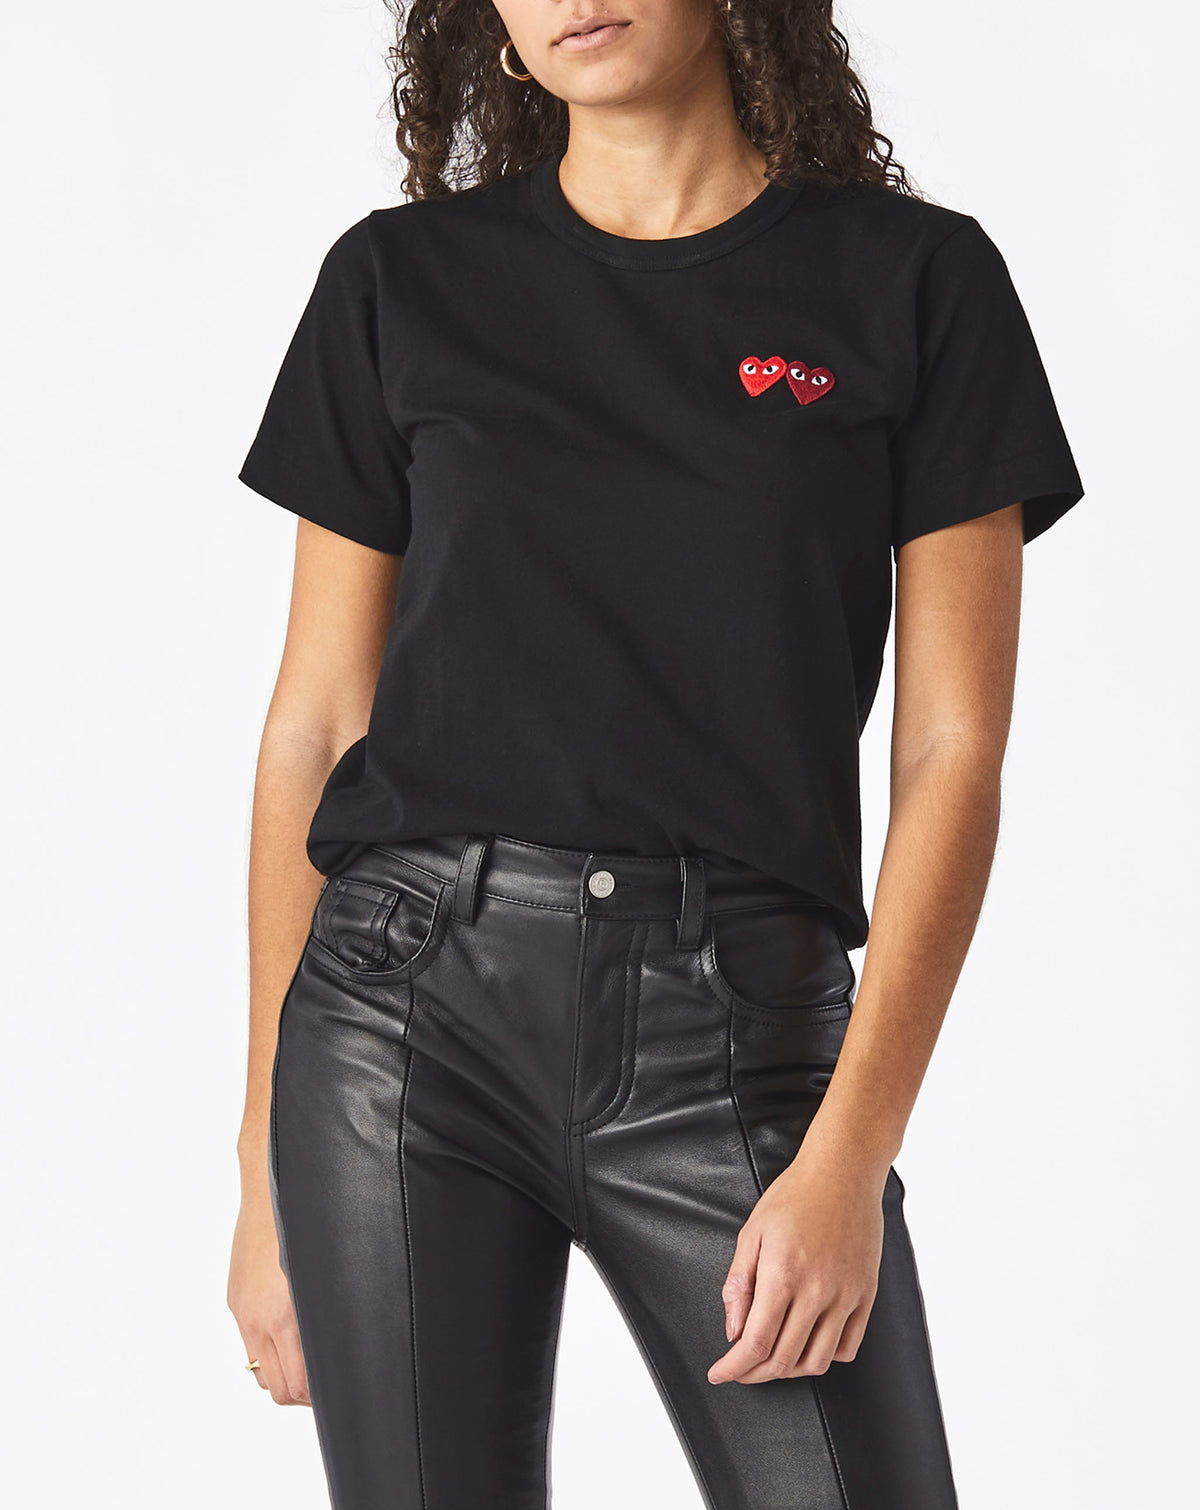 Comme des Garcons PLAY Women's Double Heart T-Shirt - Rule of Next Apparel